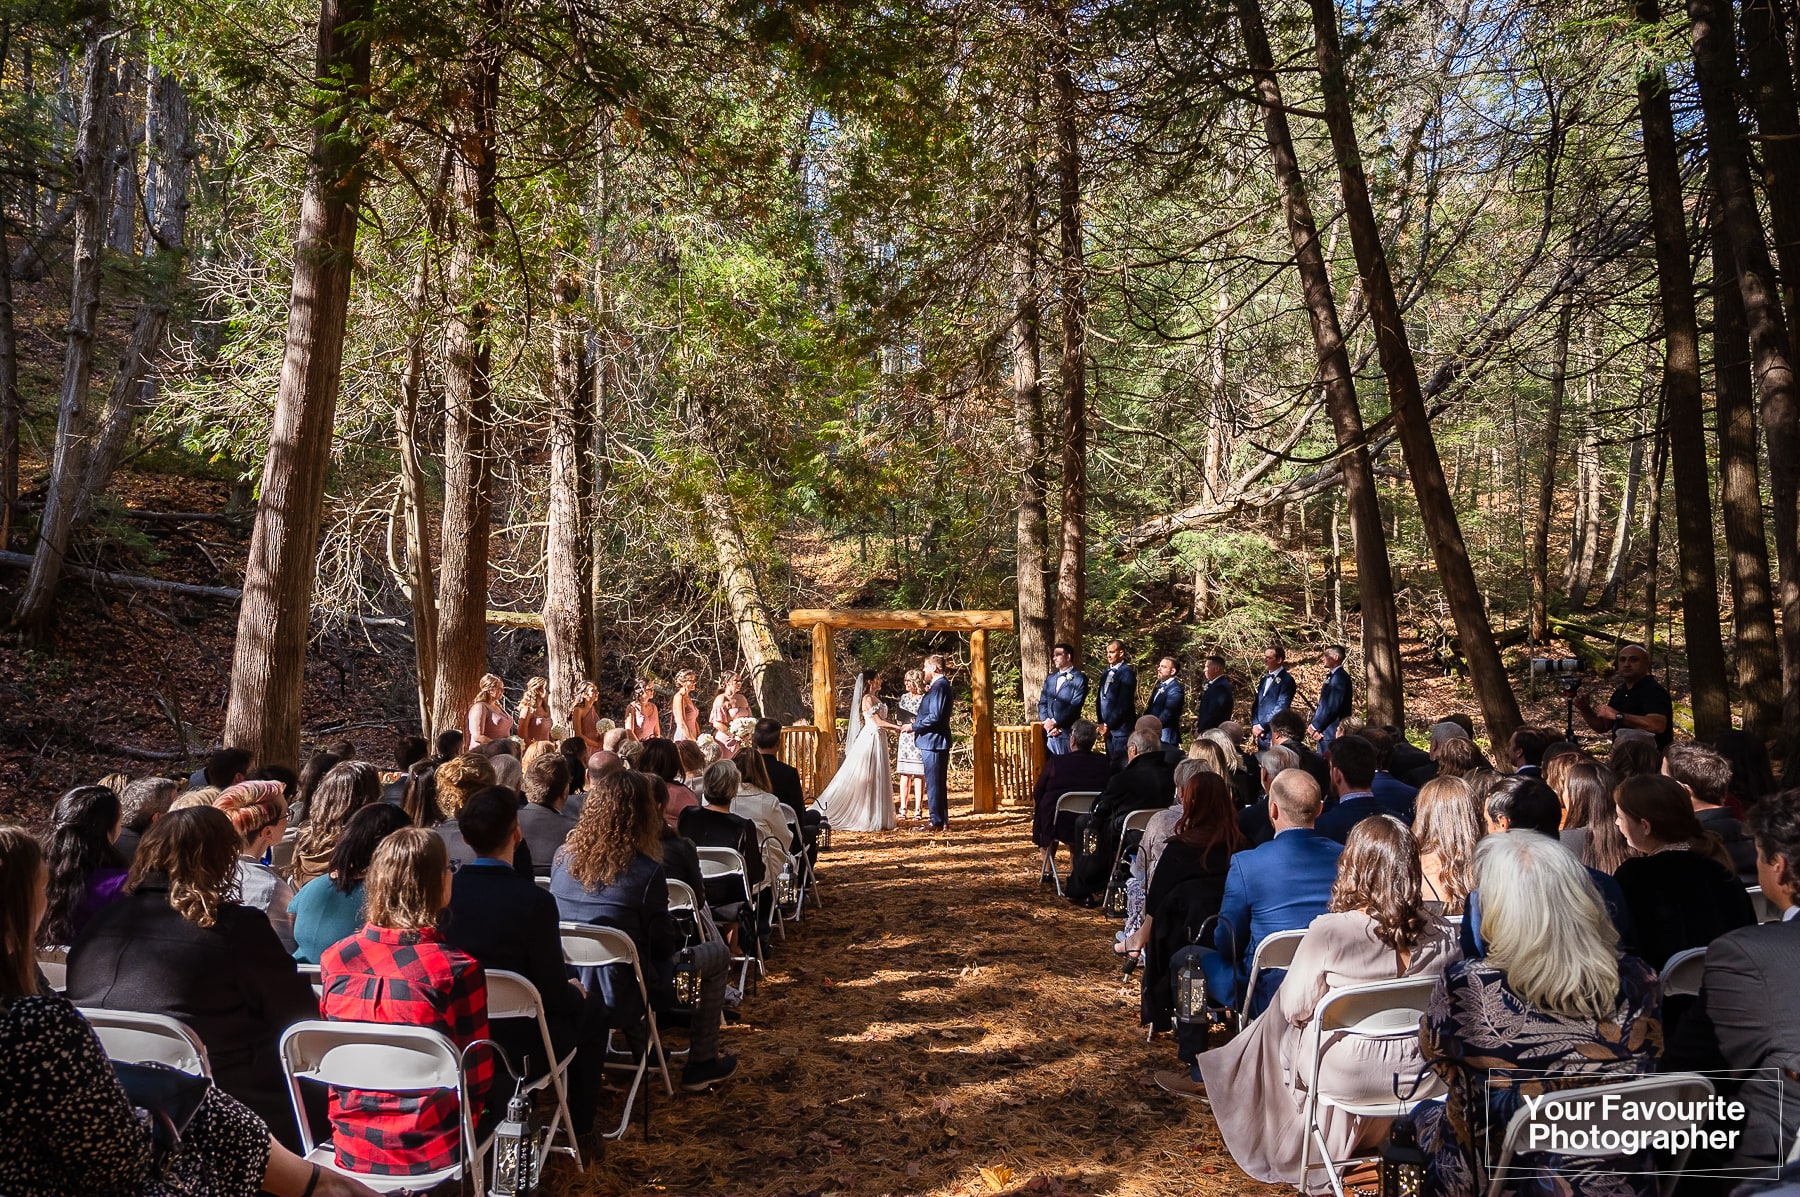 Autumn wedding photos at Ganaraska Forest